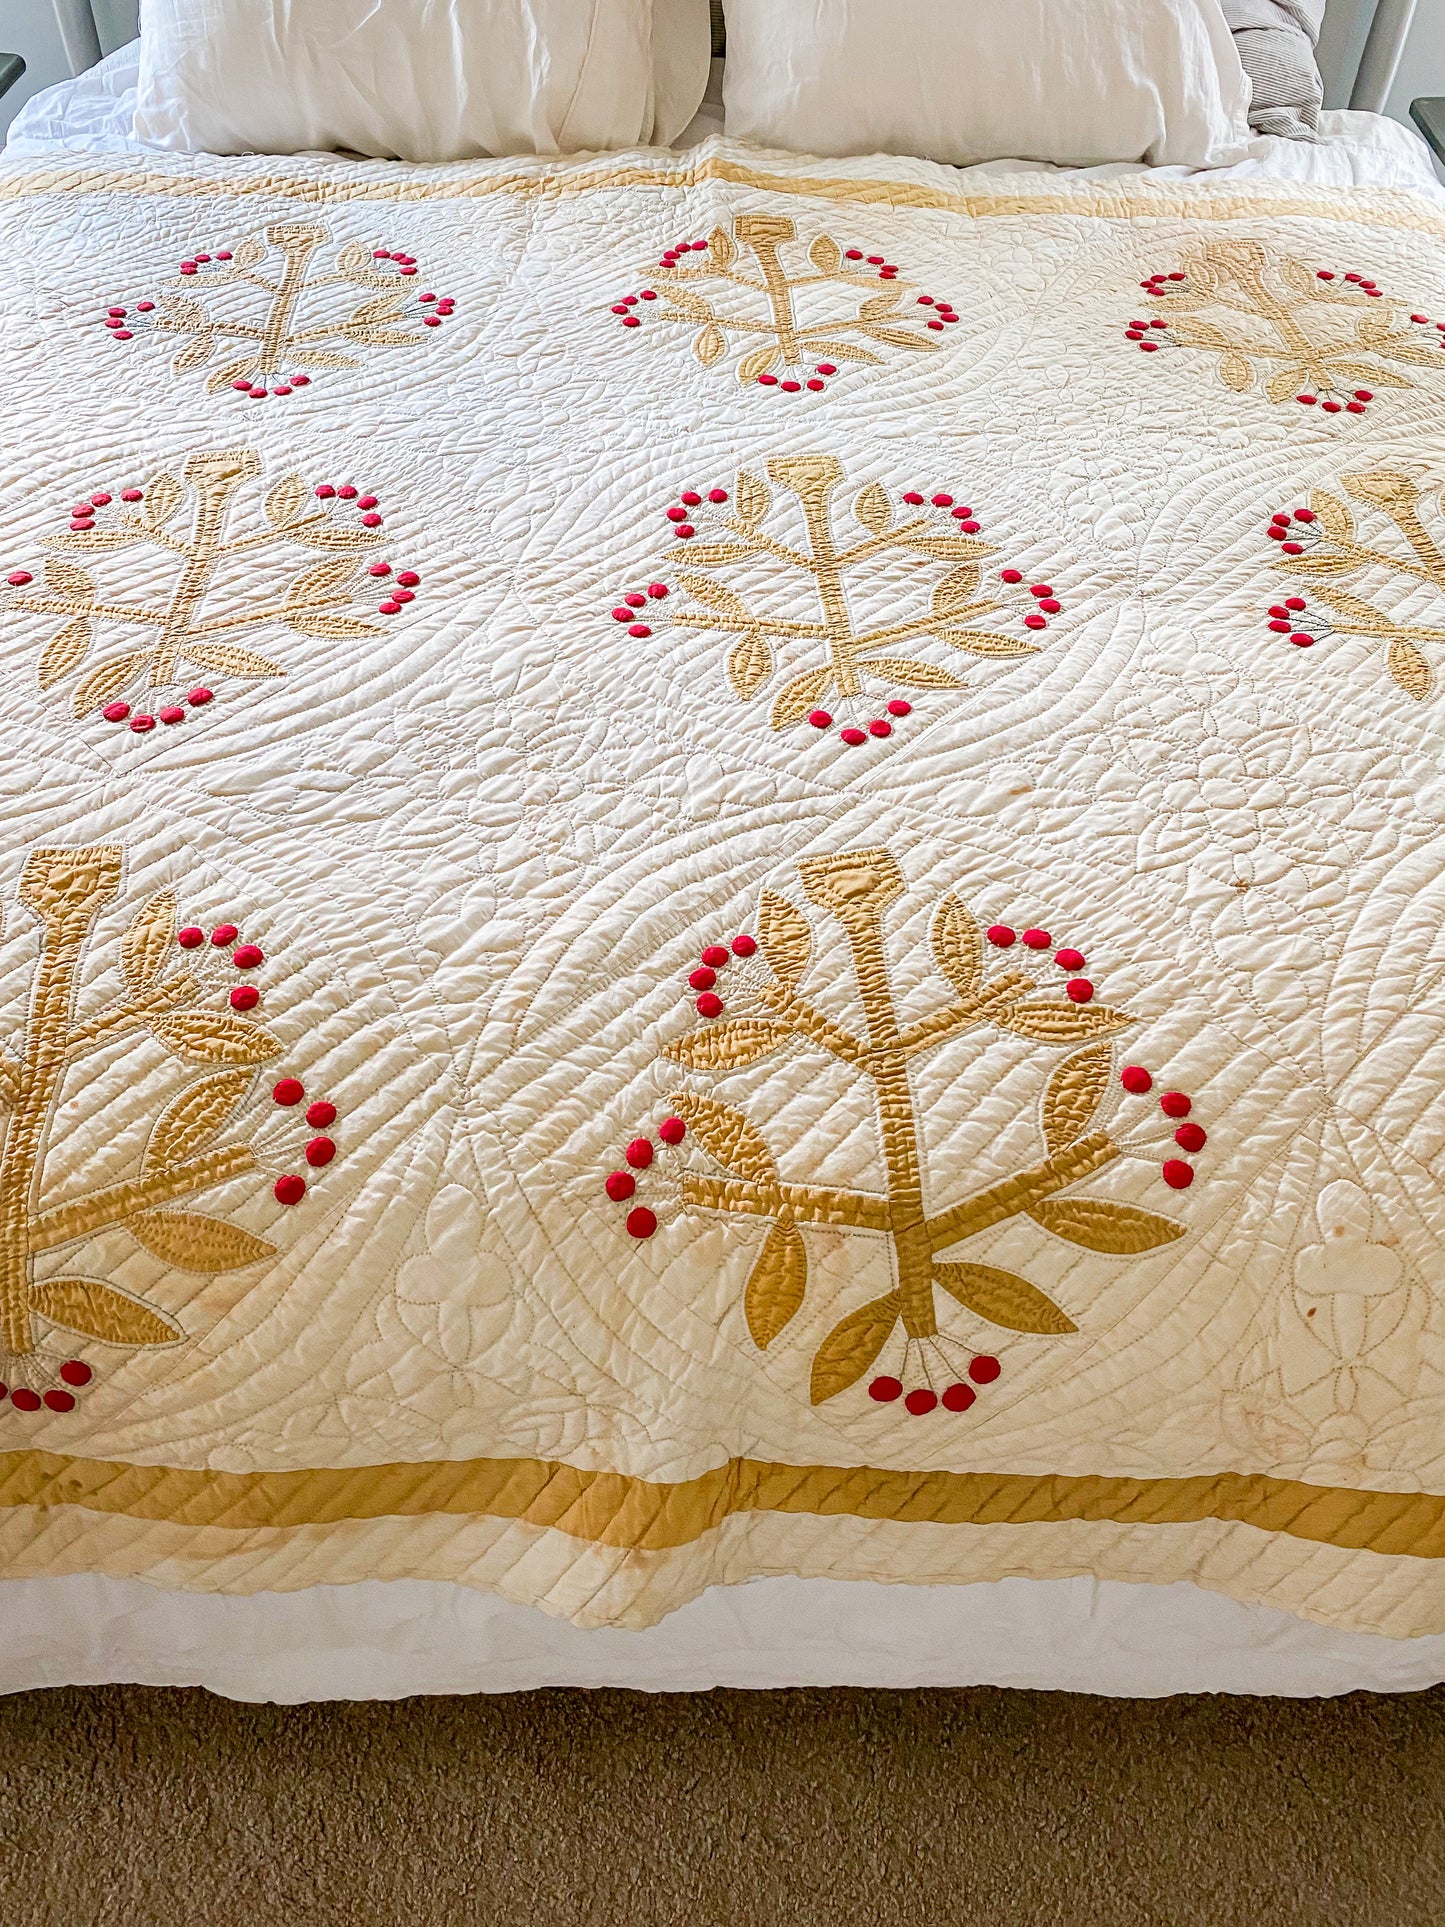 Antique Unfinished Trapunto Applique Quilt | Stacker Cutter Quilt c1860s